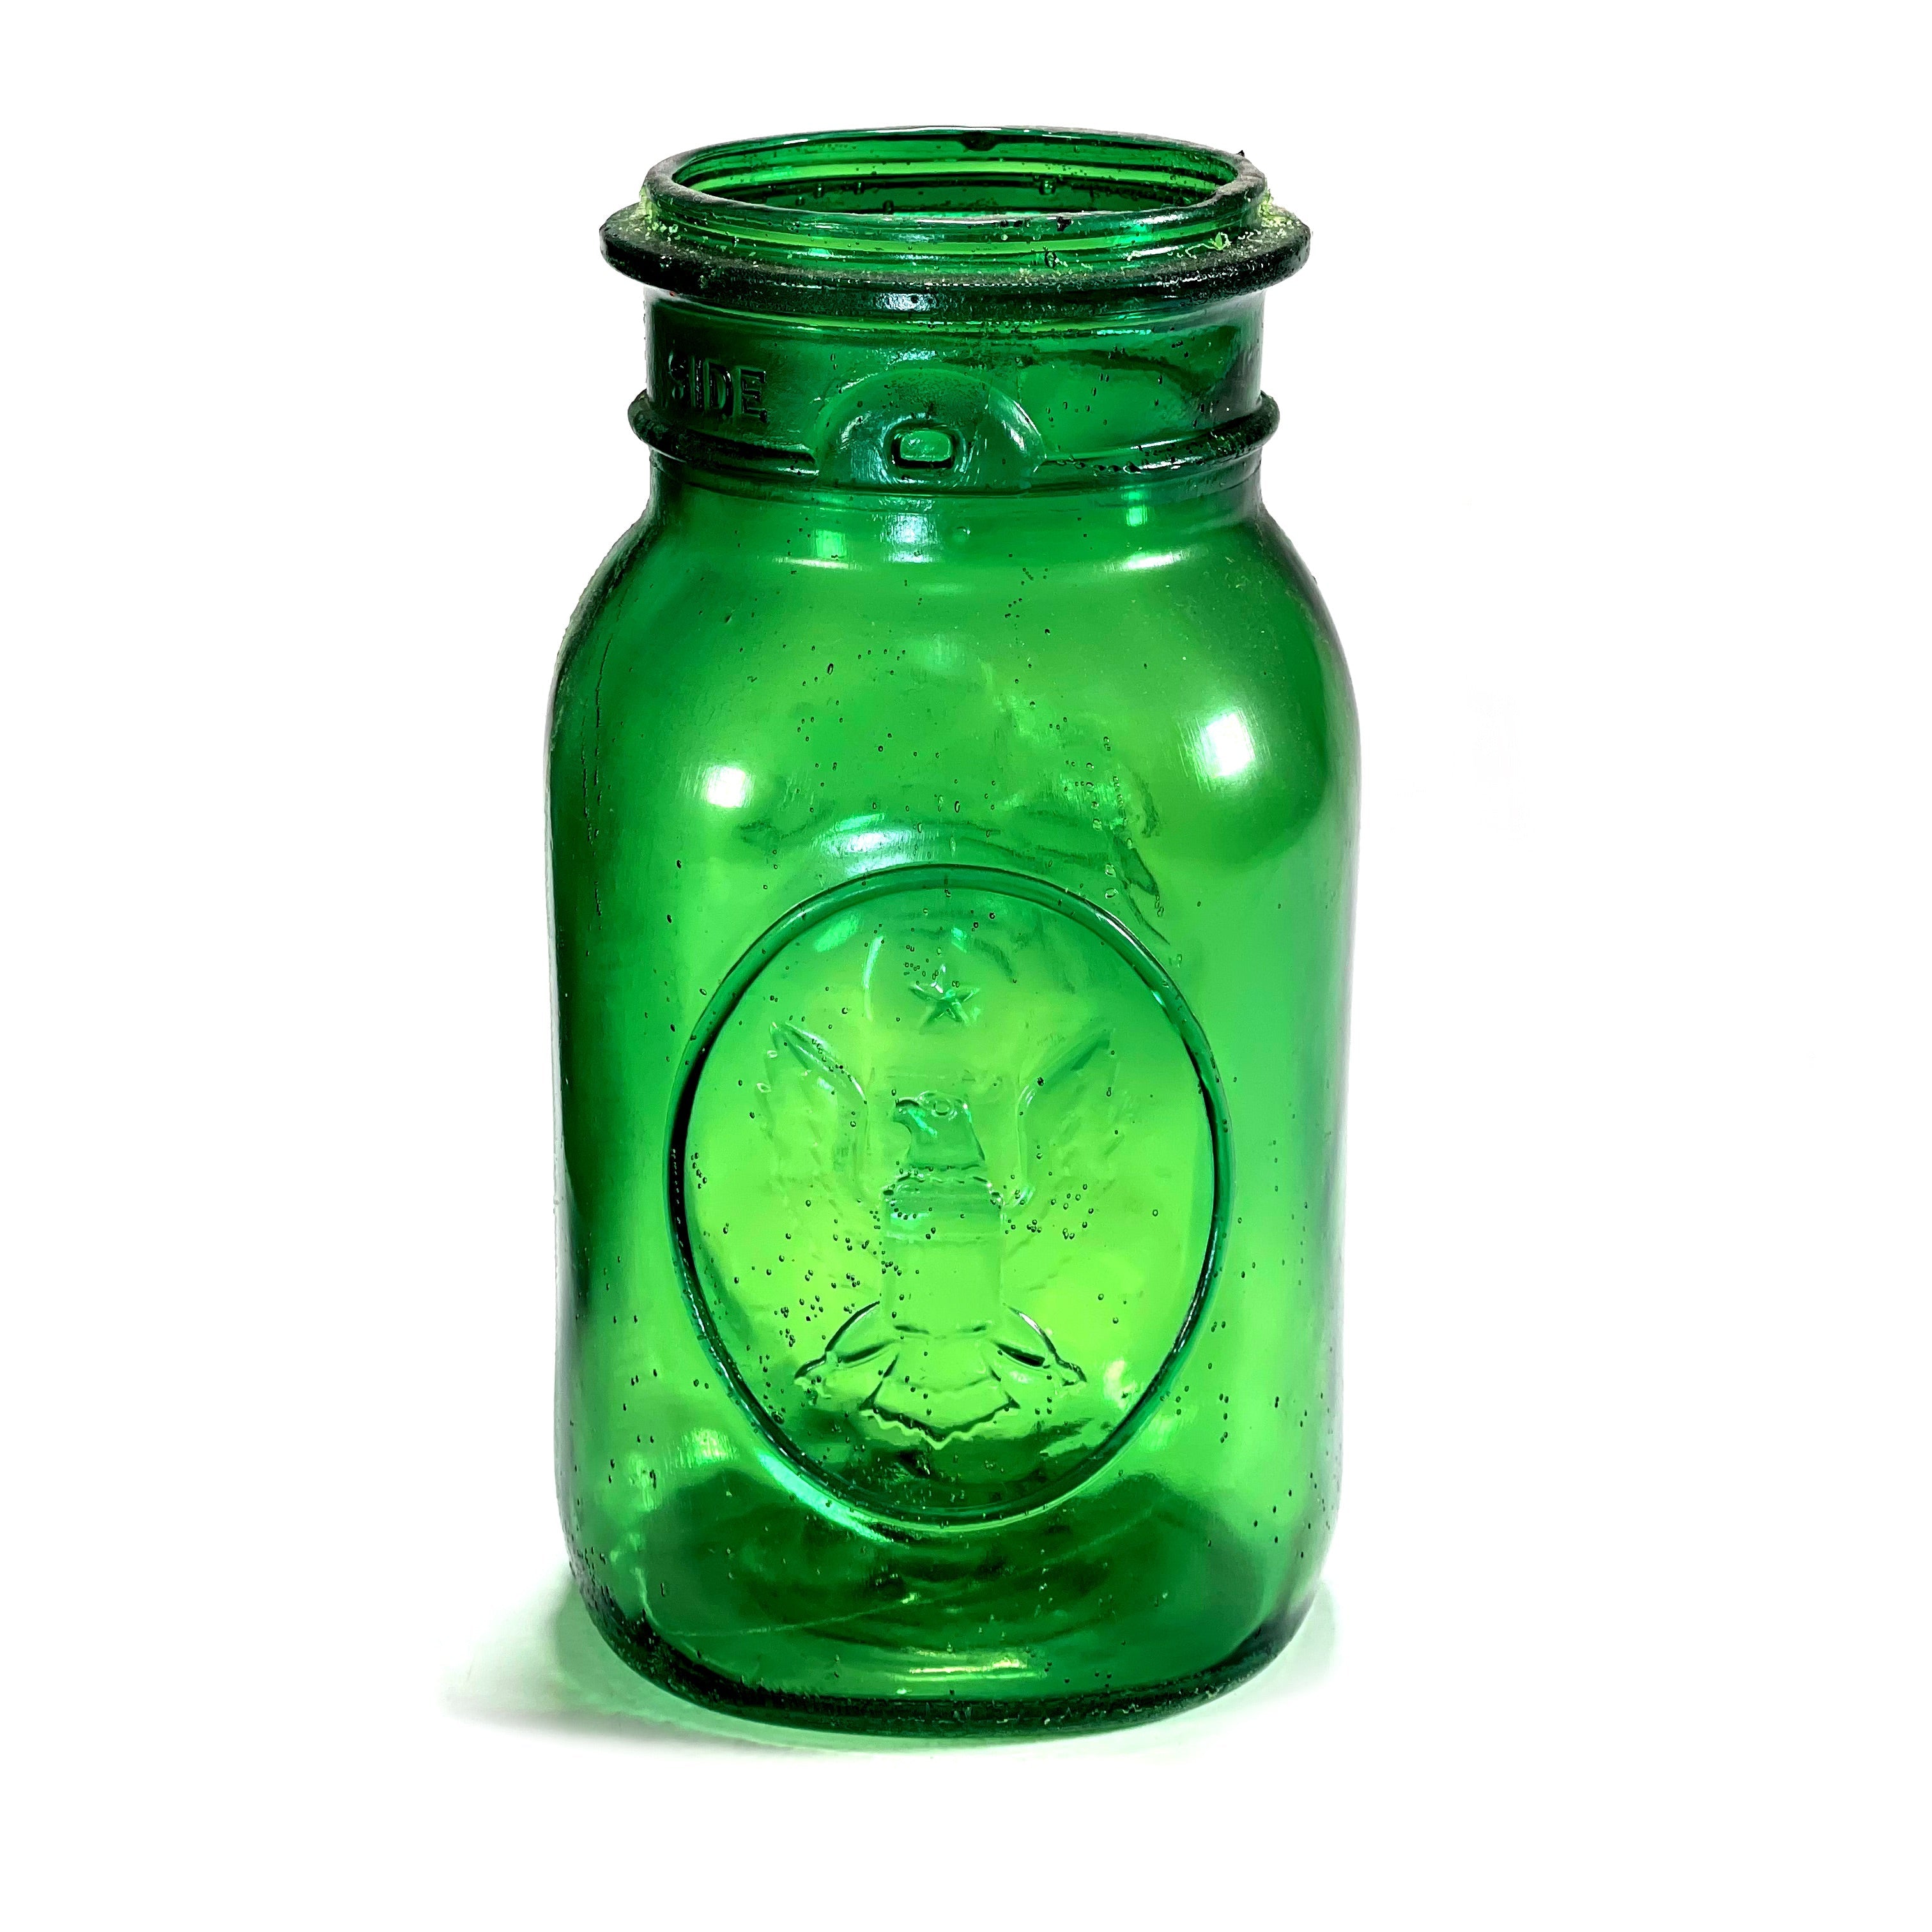 SMASHProps Breakaway Large Mason Jar Prop - DARK GREEN translucent - Dark Green Translucent